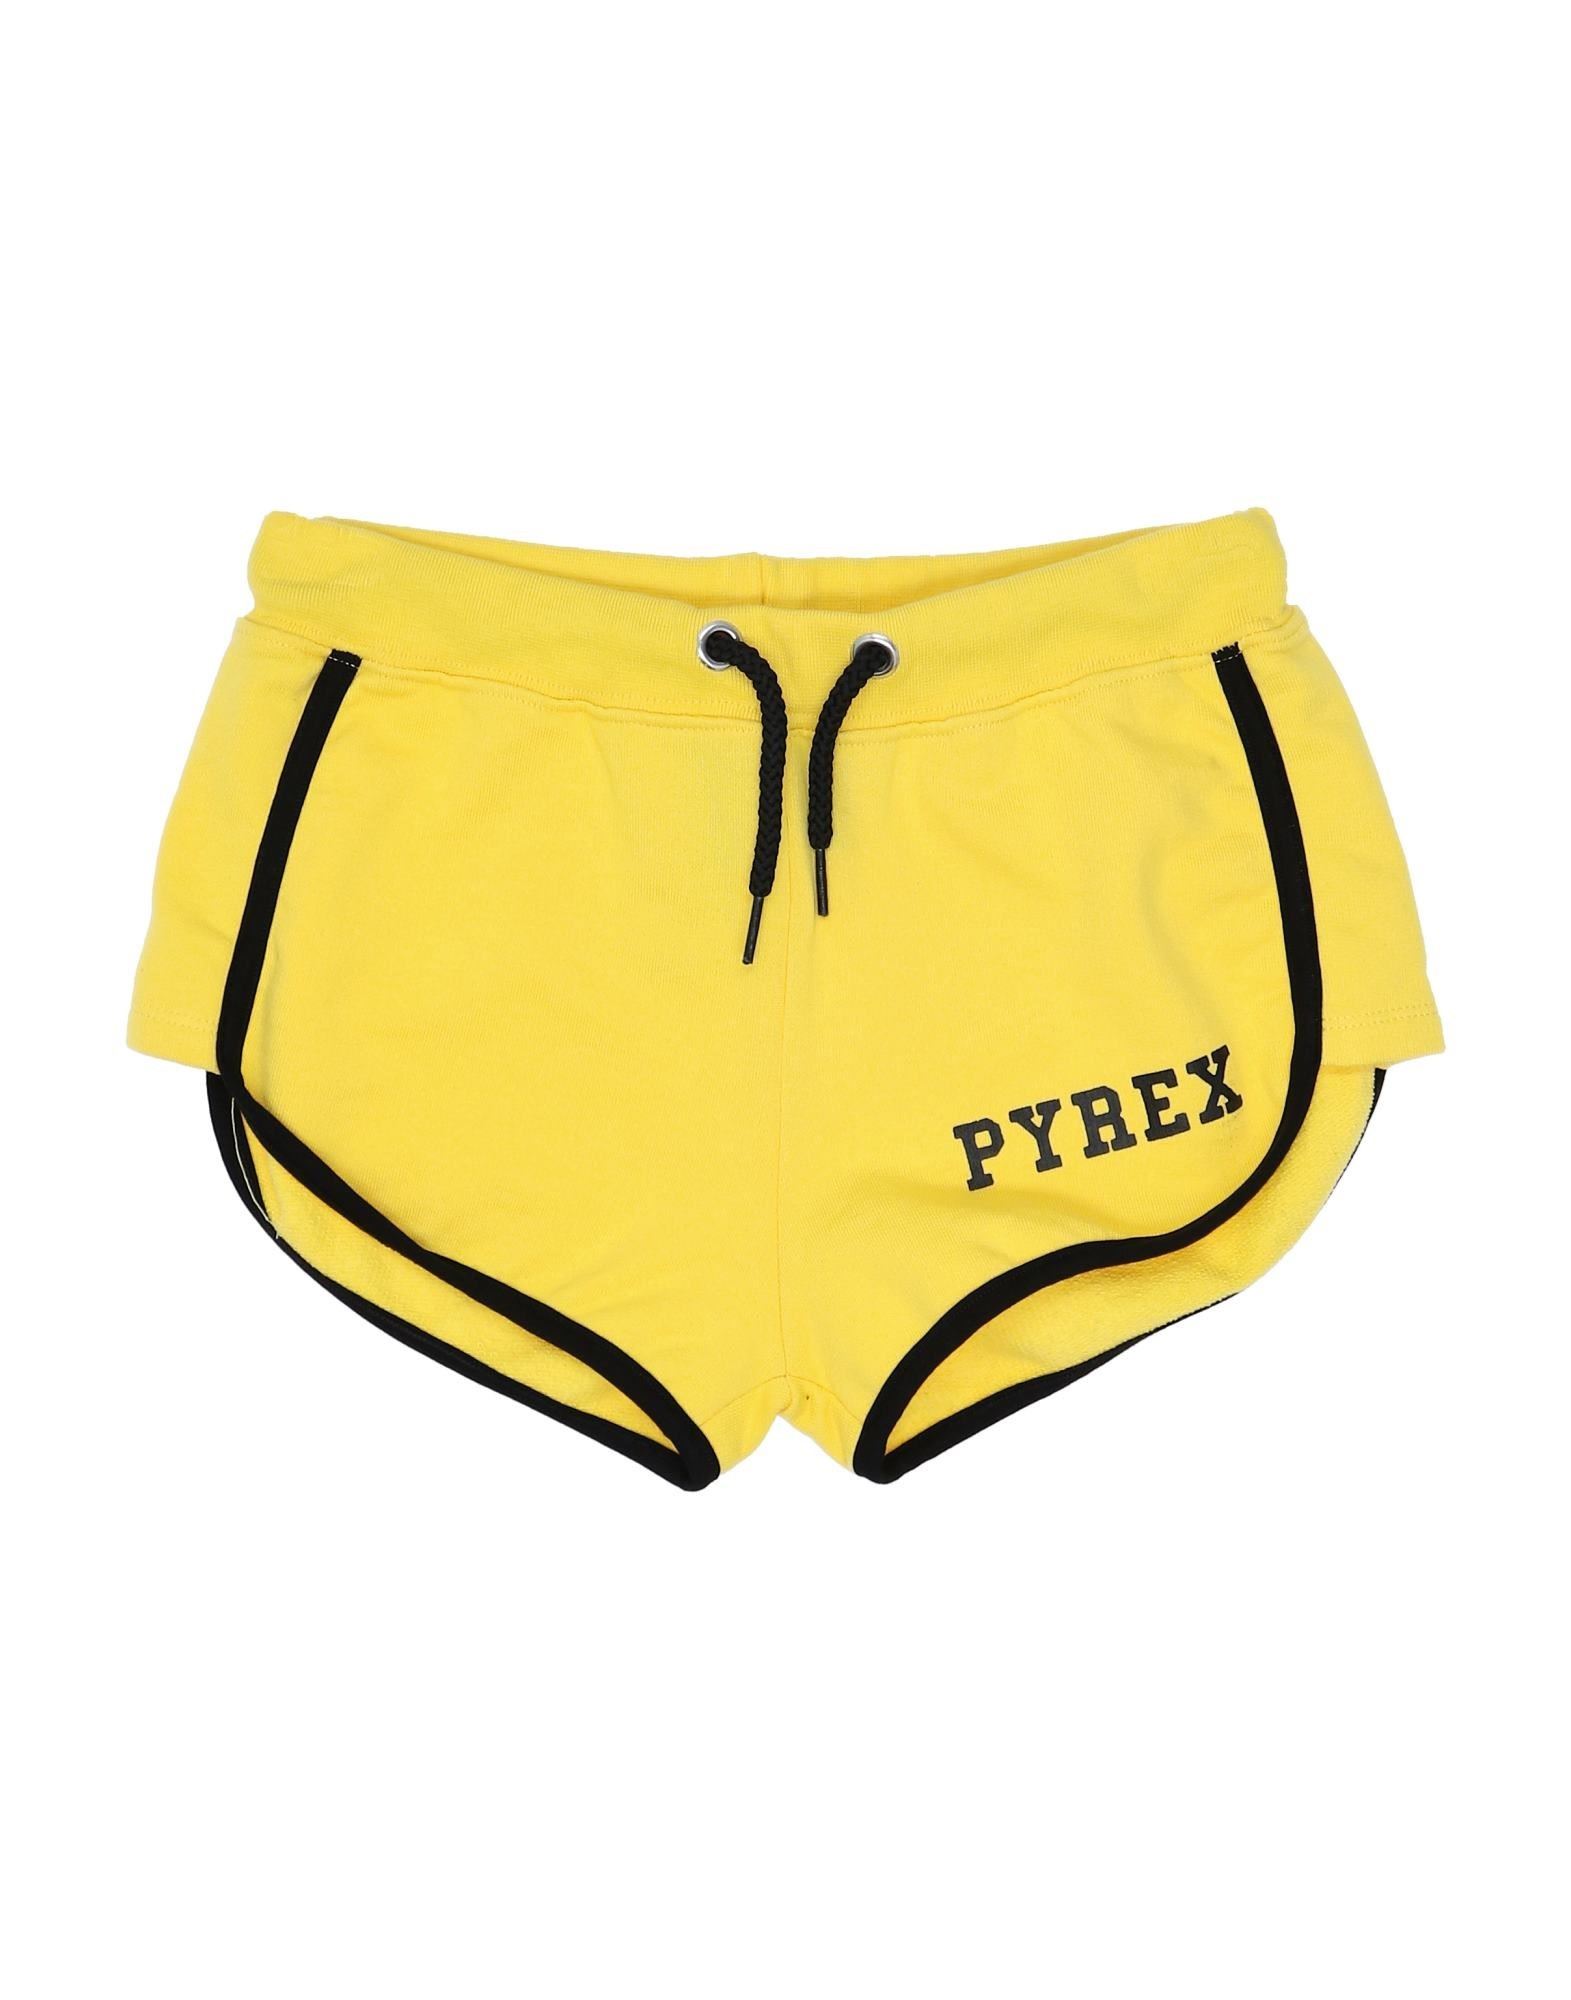 Pyrex Kids' Shorts In Yellow